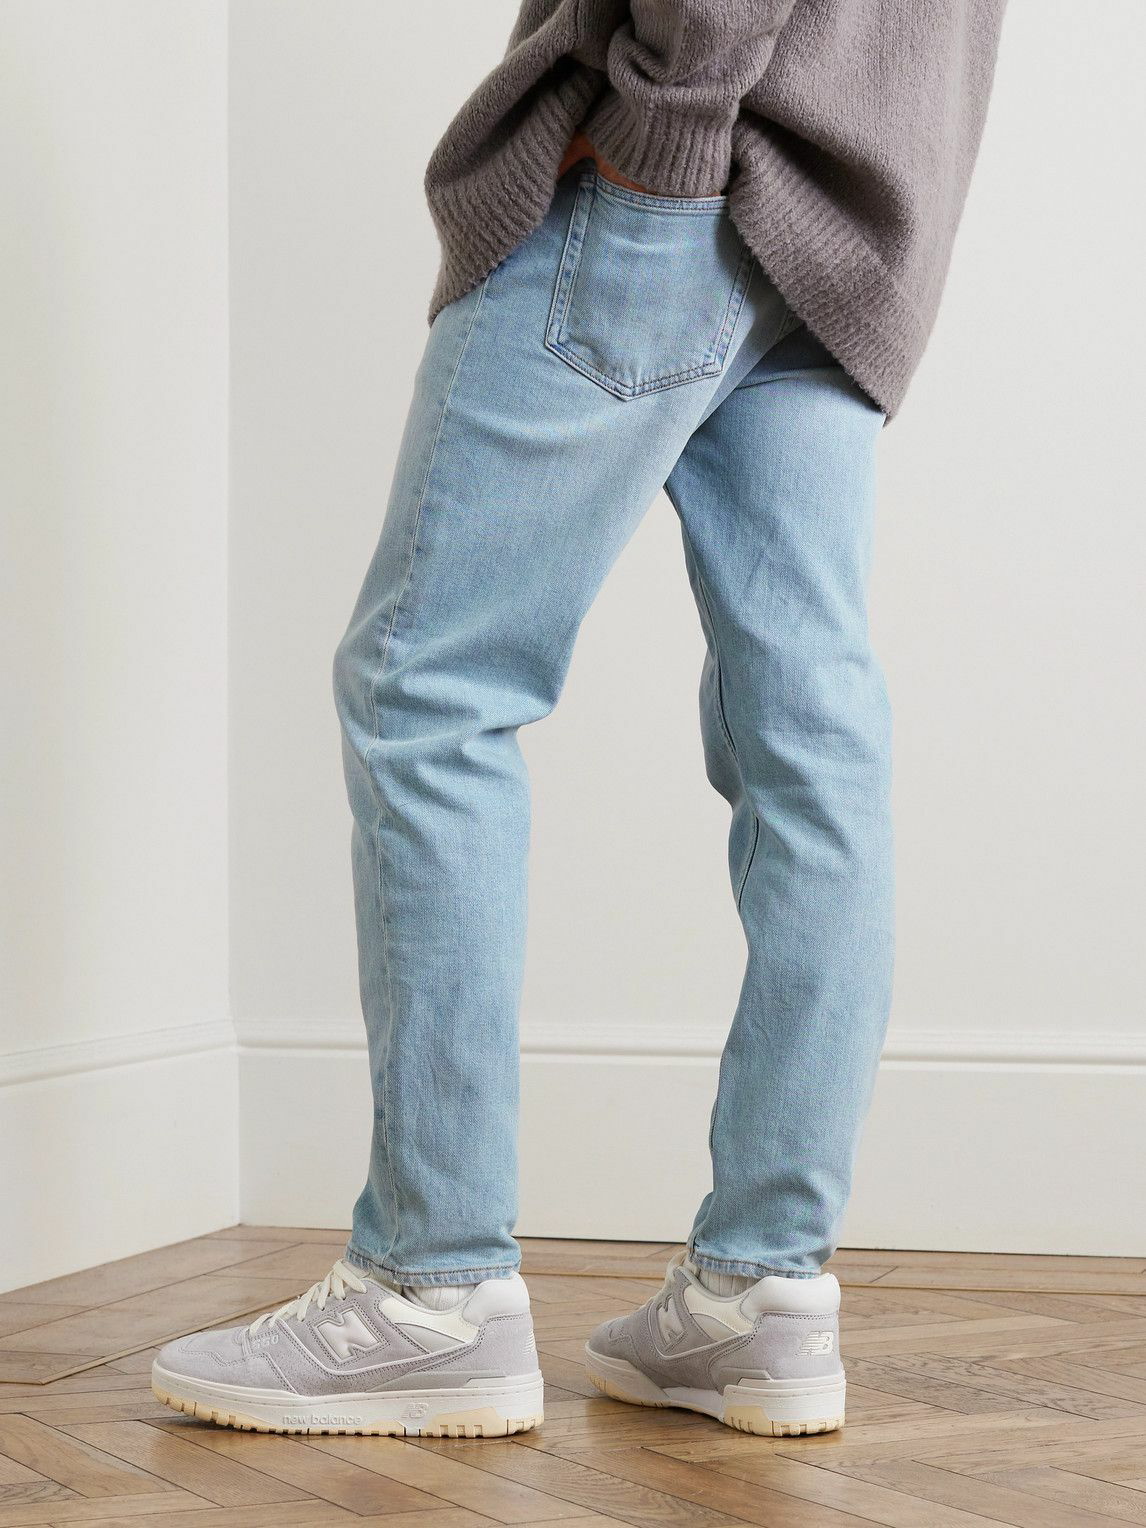 NEW新品acne studios - river jeans パンツ